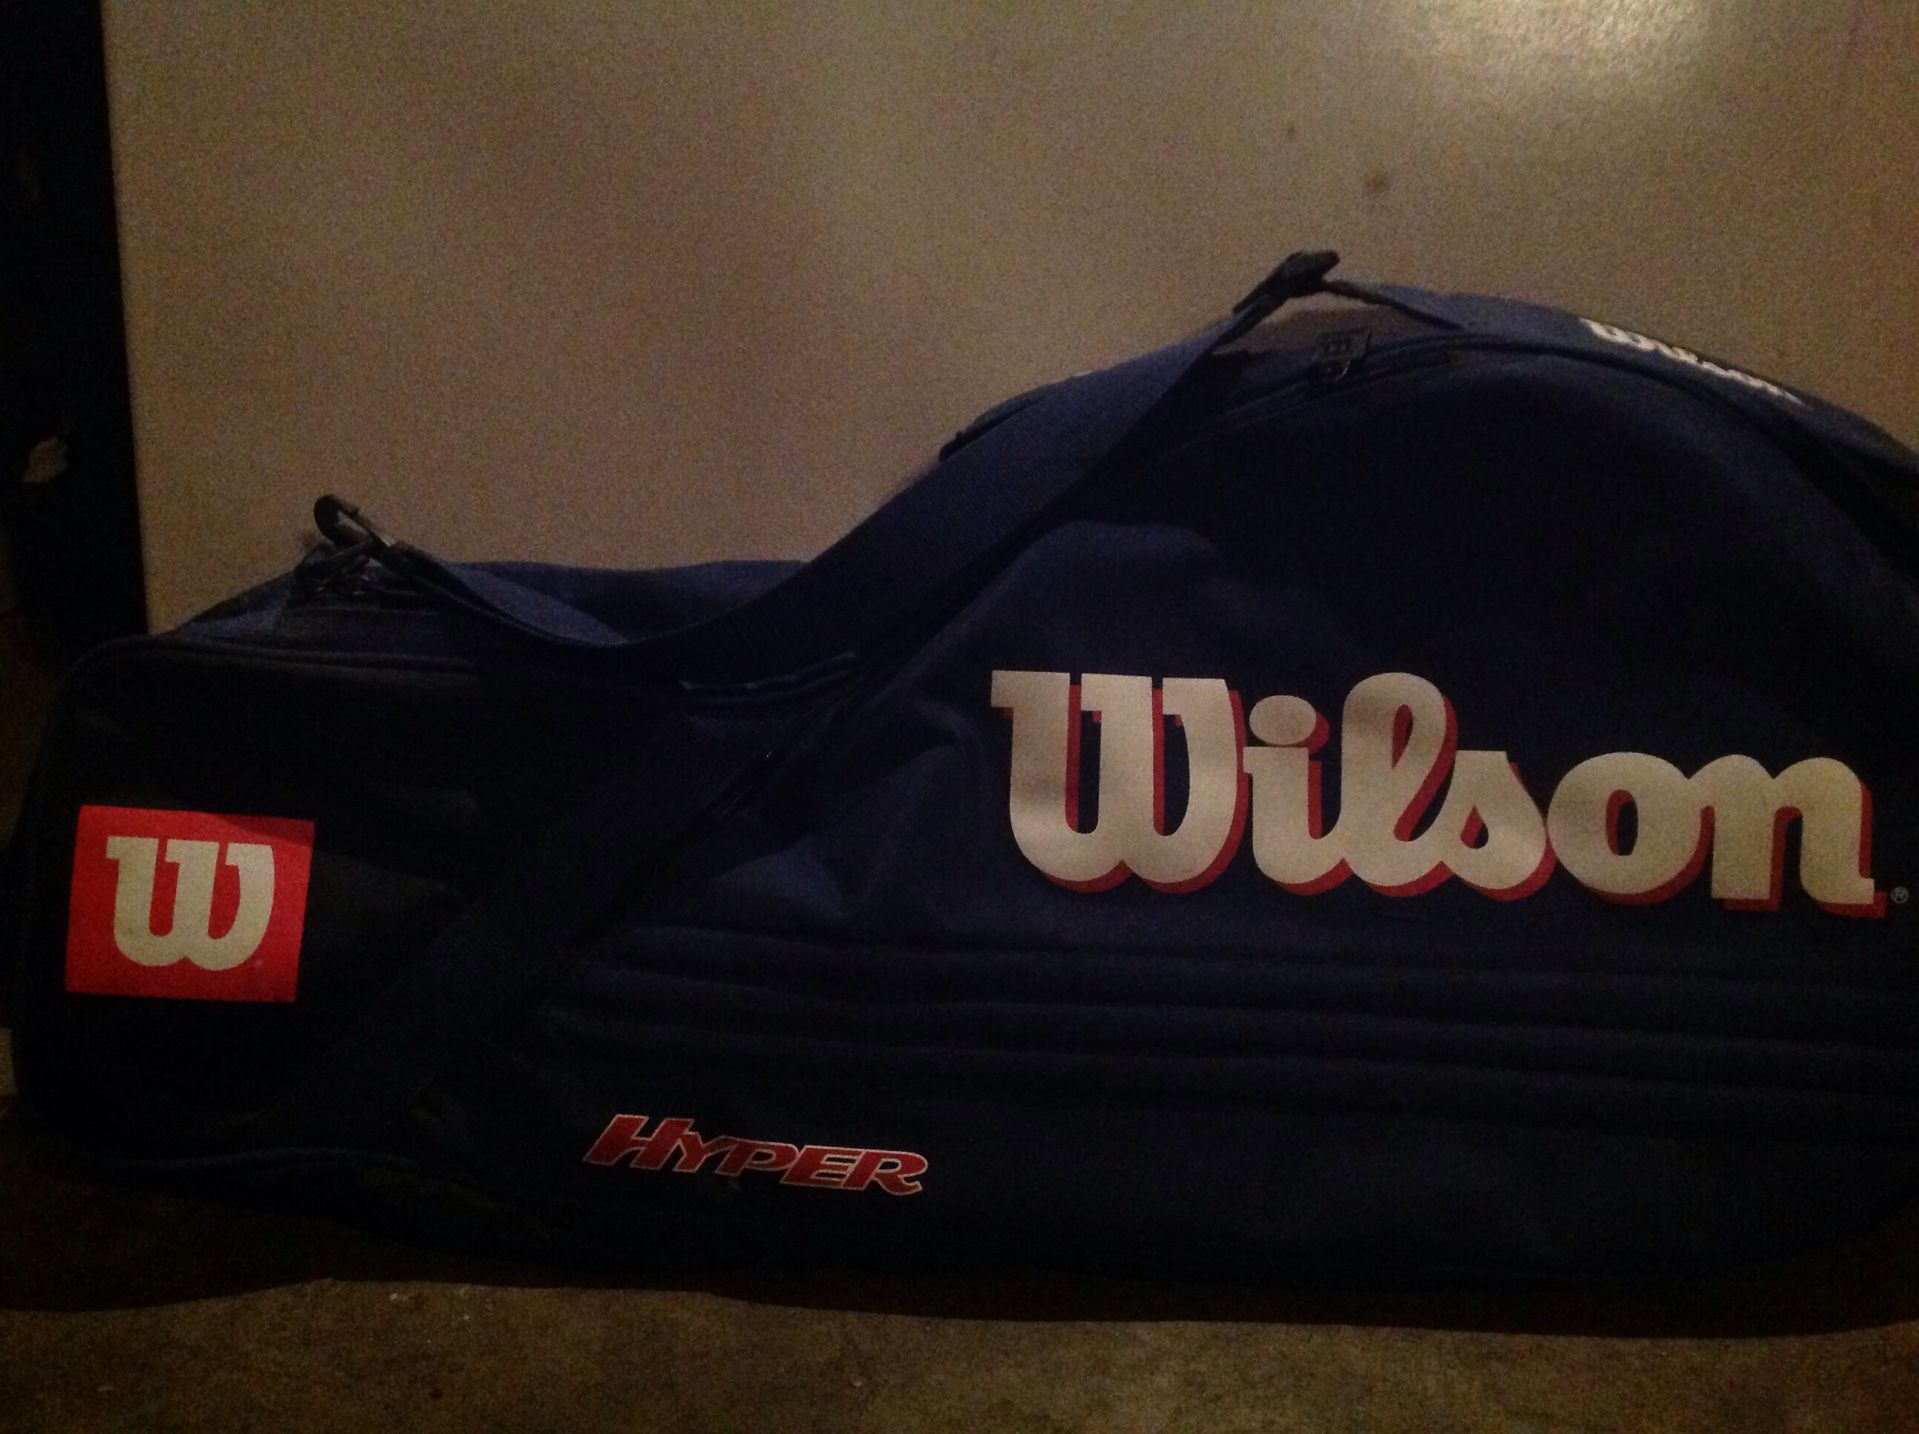 Brand new Wilson tennis racket carrying case